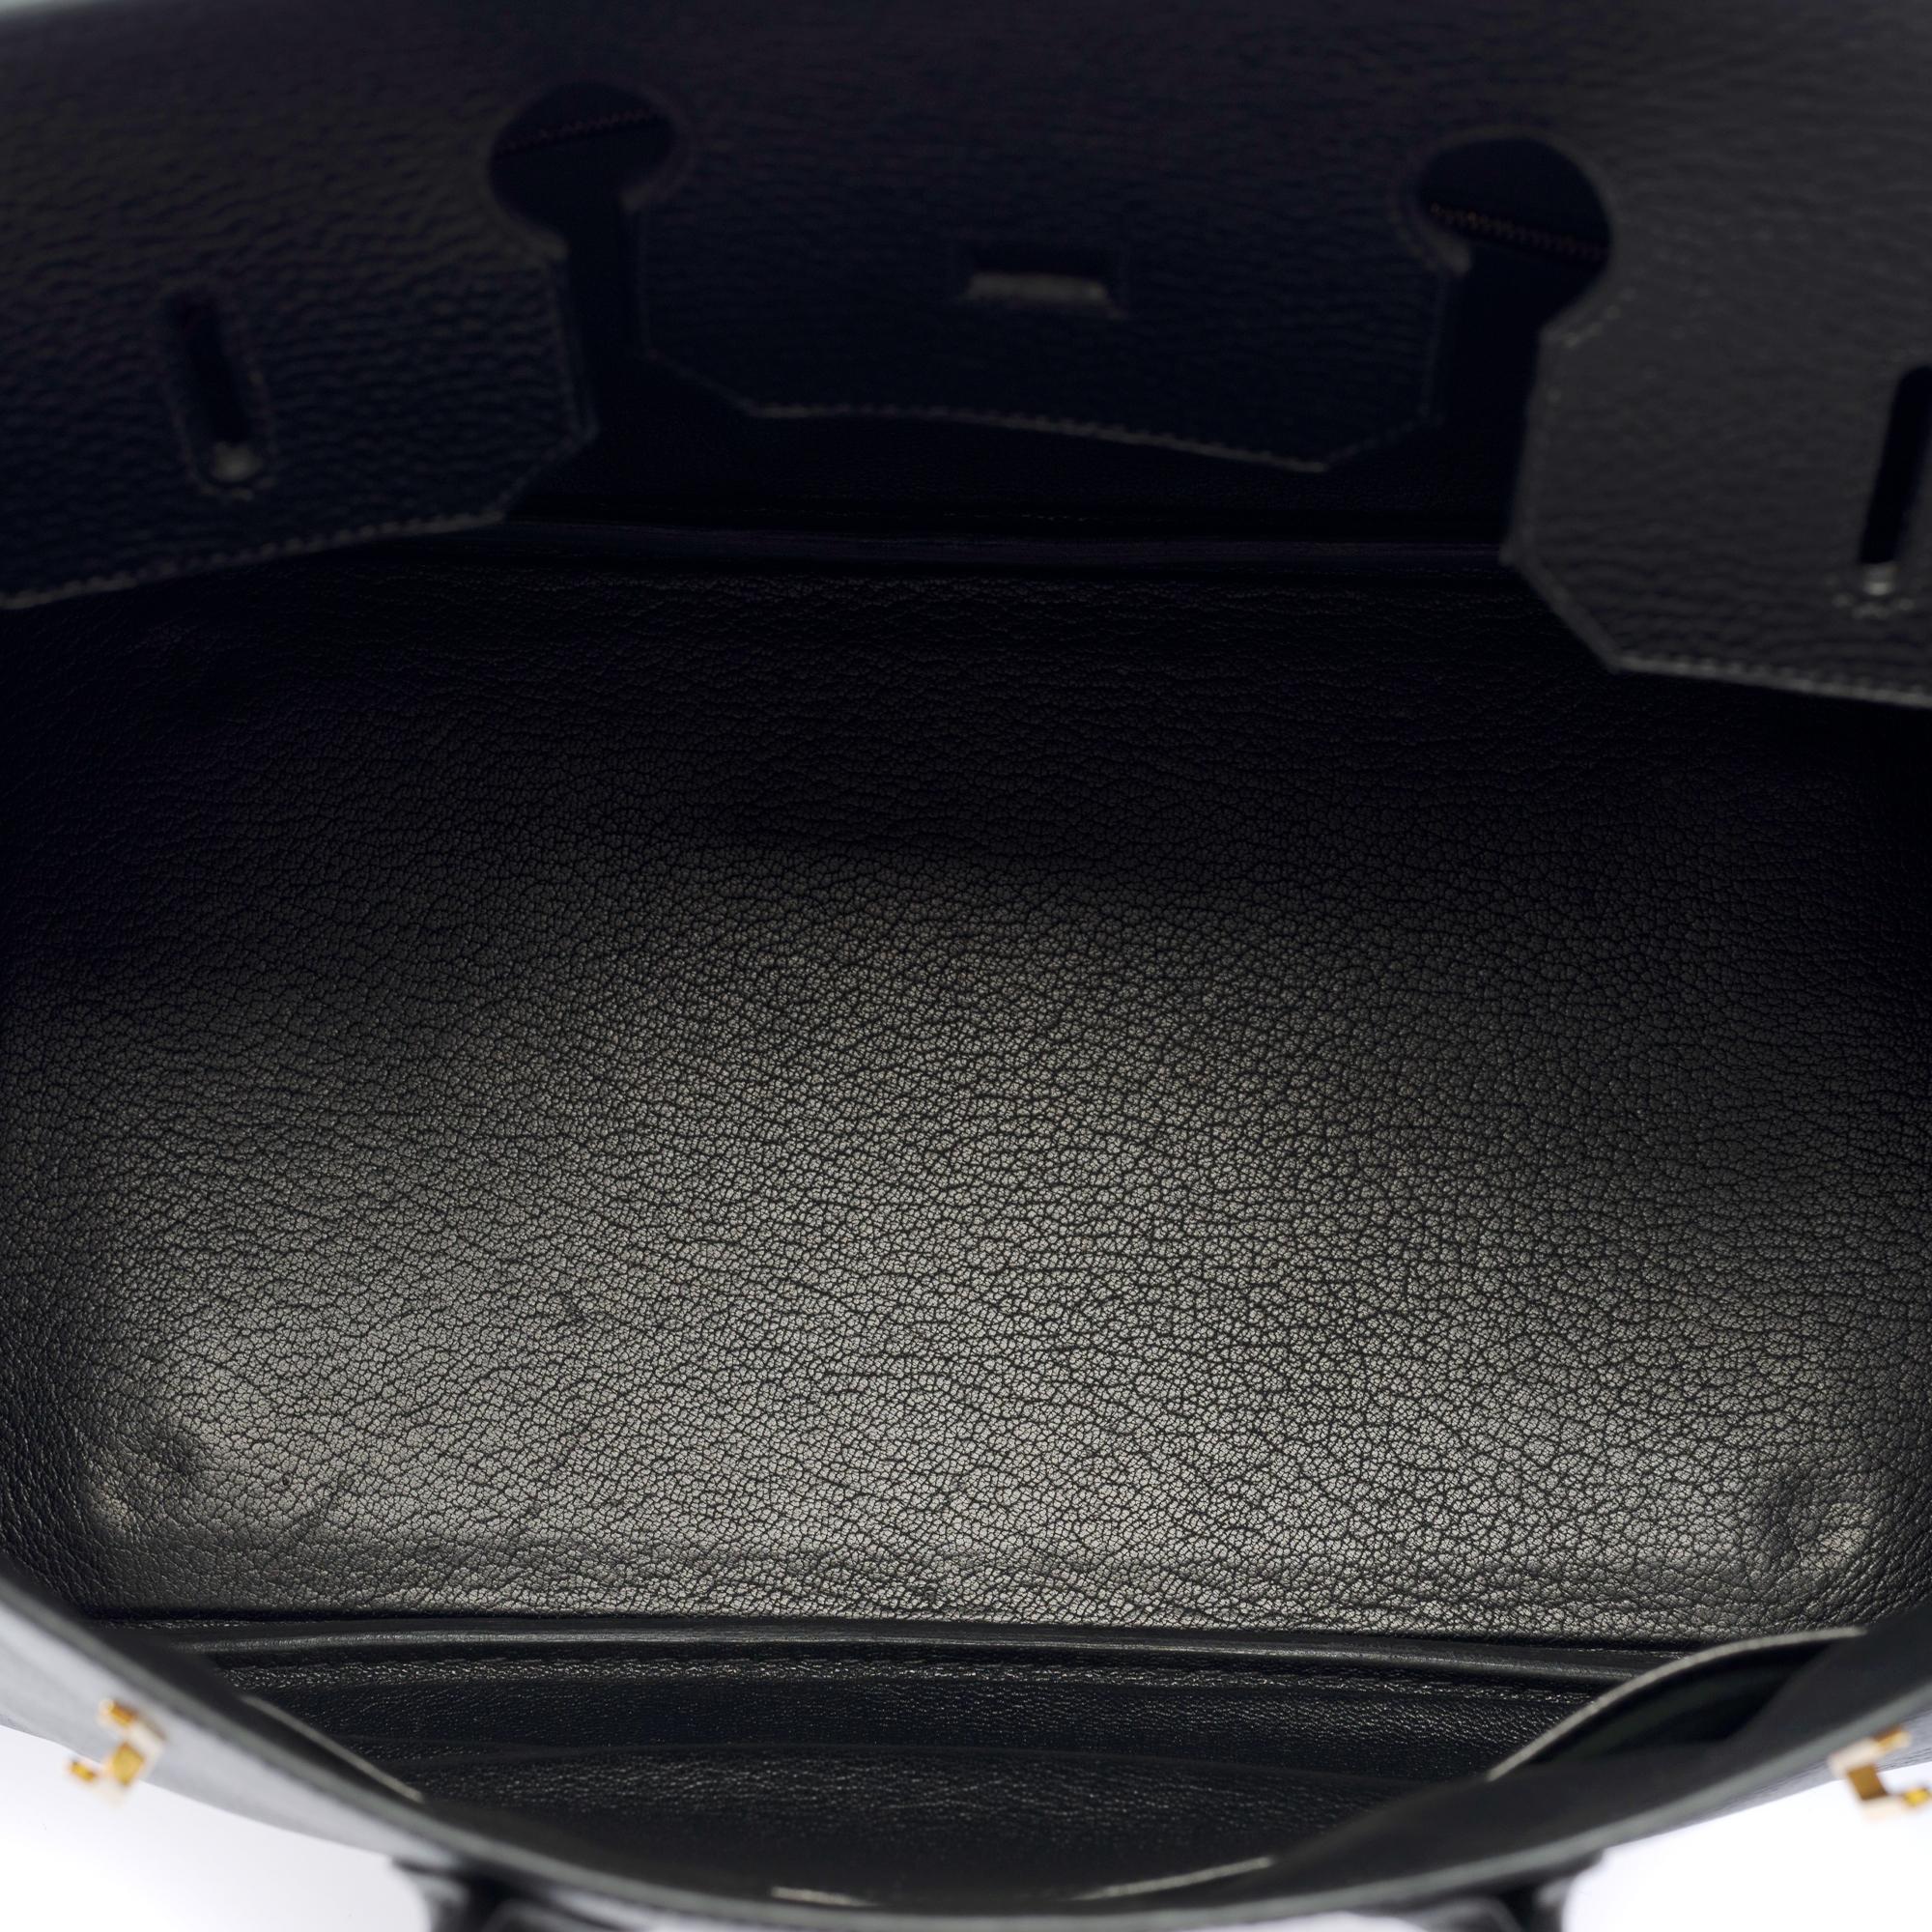 Amazing Hermès Birkin 35 handbag in black Togo leather, GHW 3